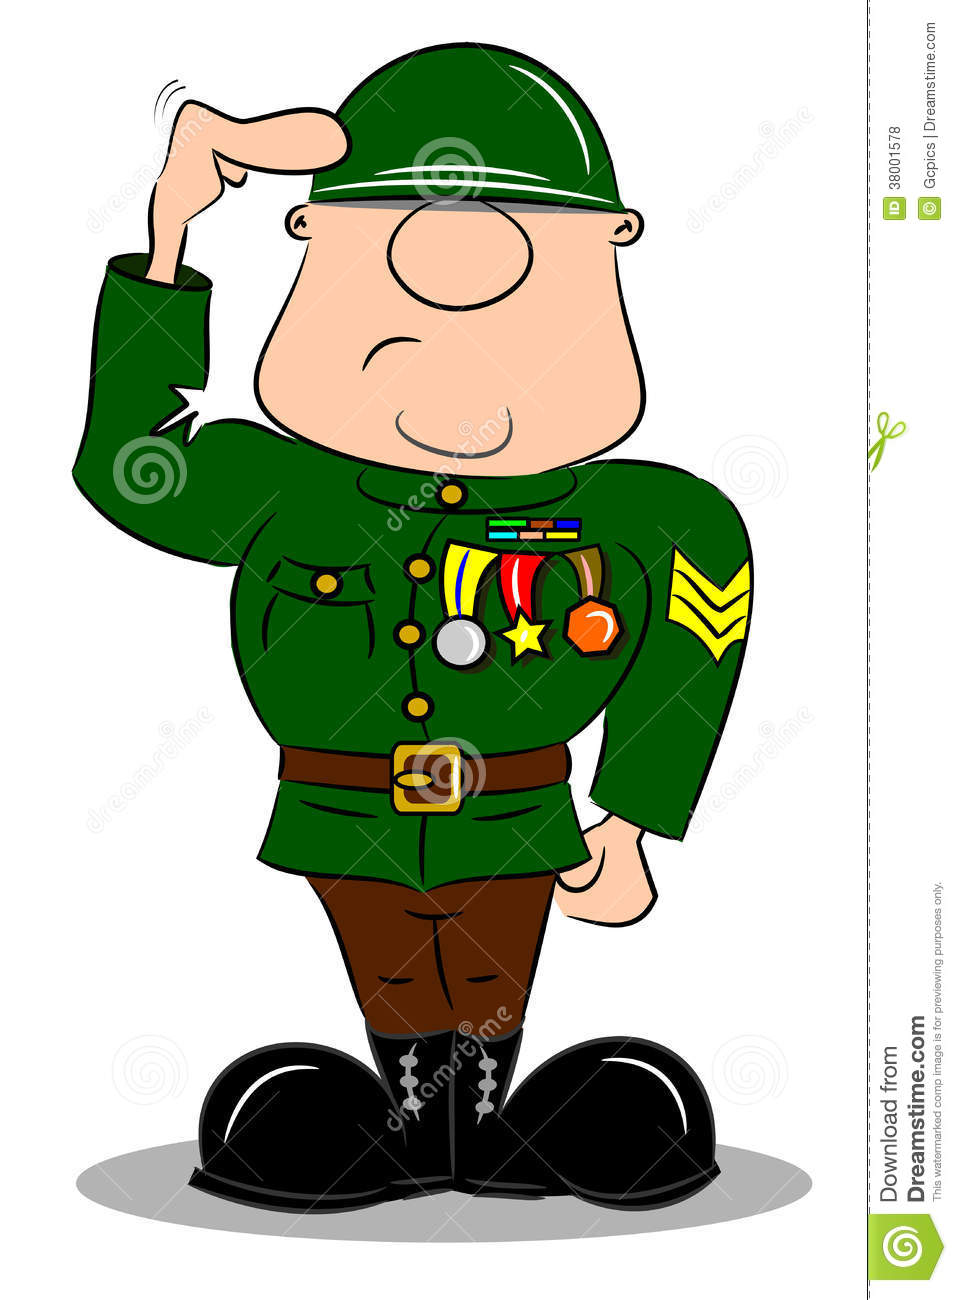 Saluting Cartoon Soldier Royalty Free Stock Photos   Image  38001578